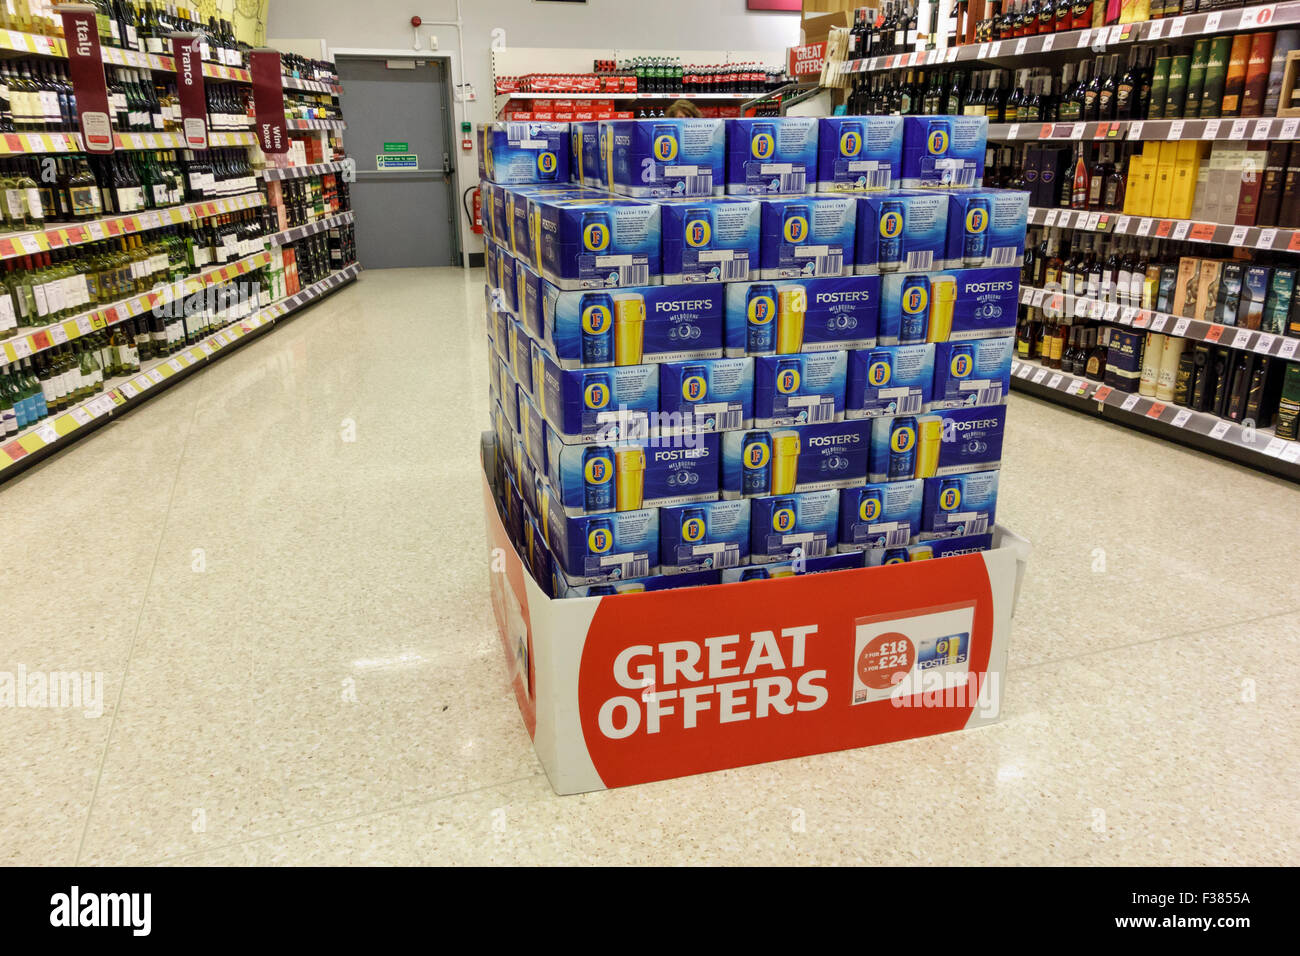 Display of Foster's at Sainsbury's supermarket, UK Stock Photo